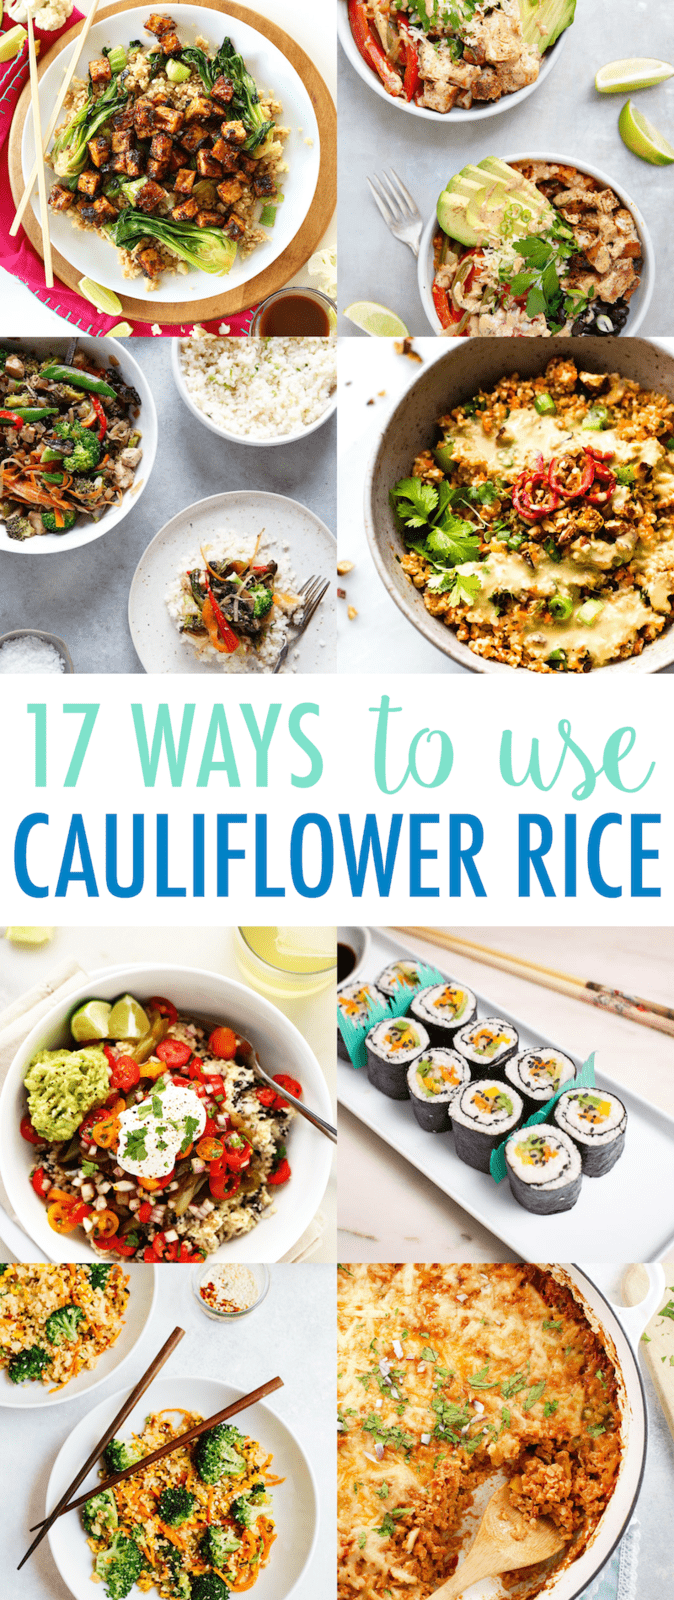 17 Ways To Use Cauliflower Rice.